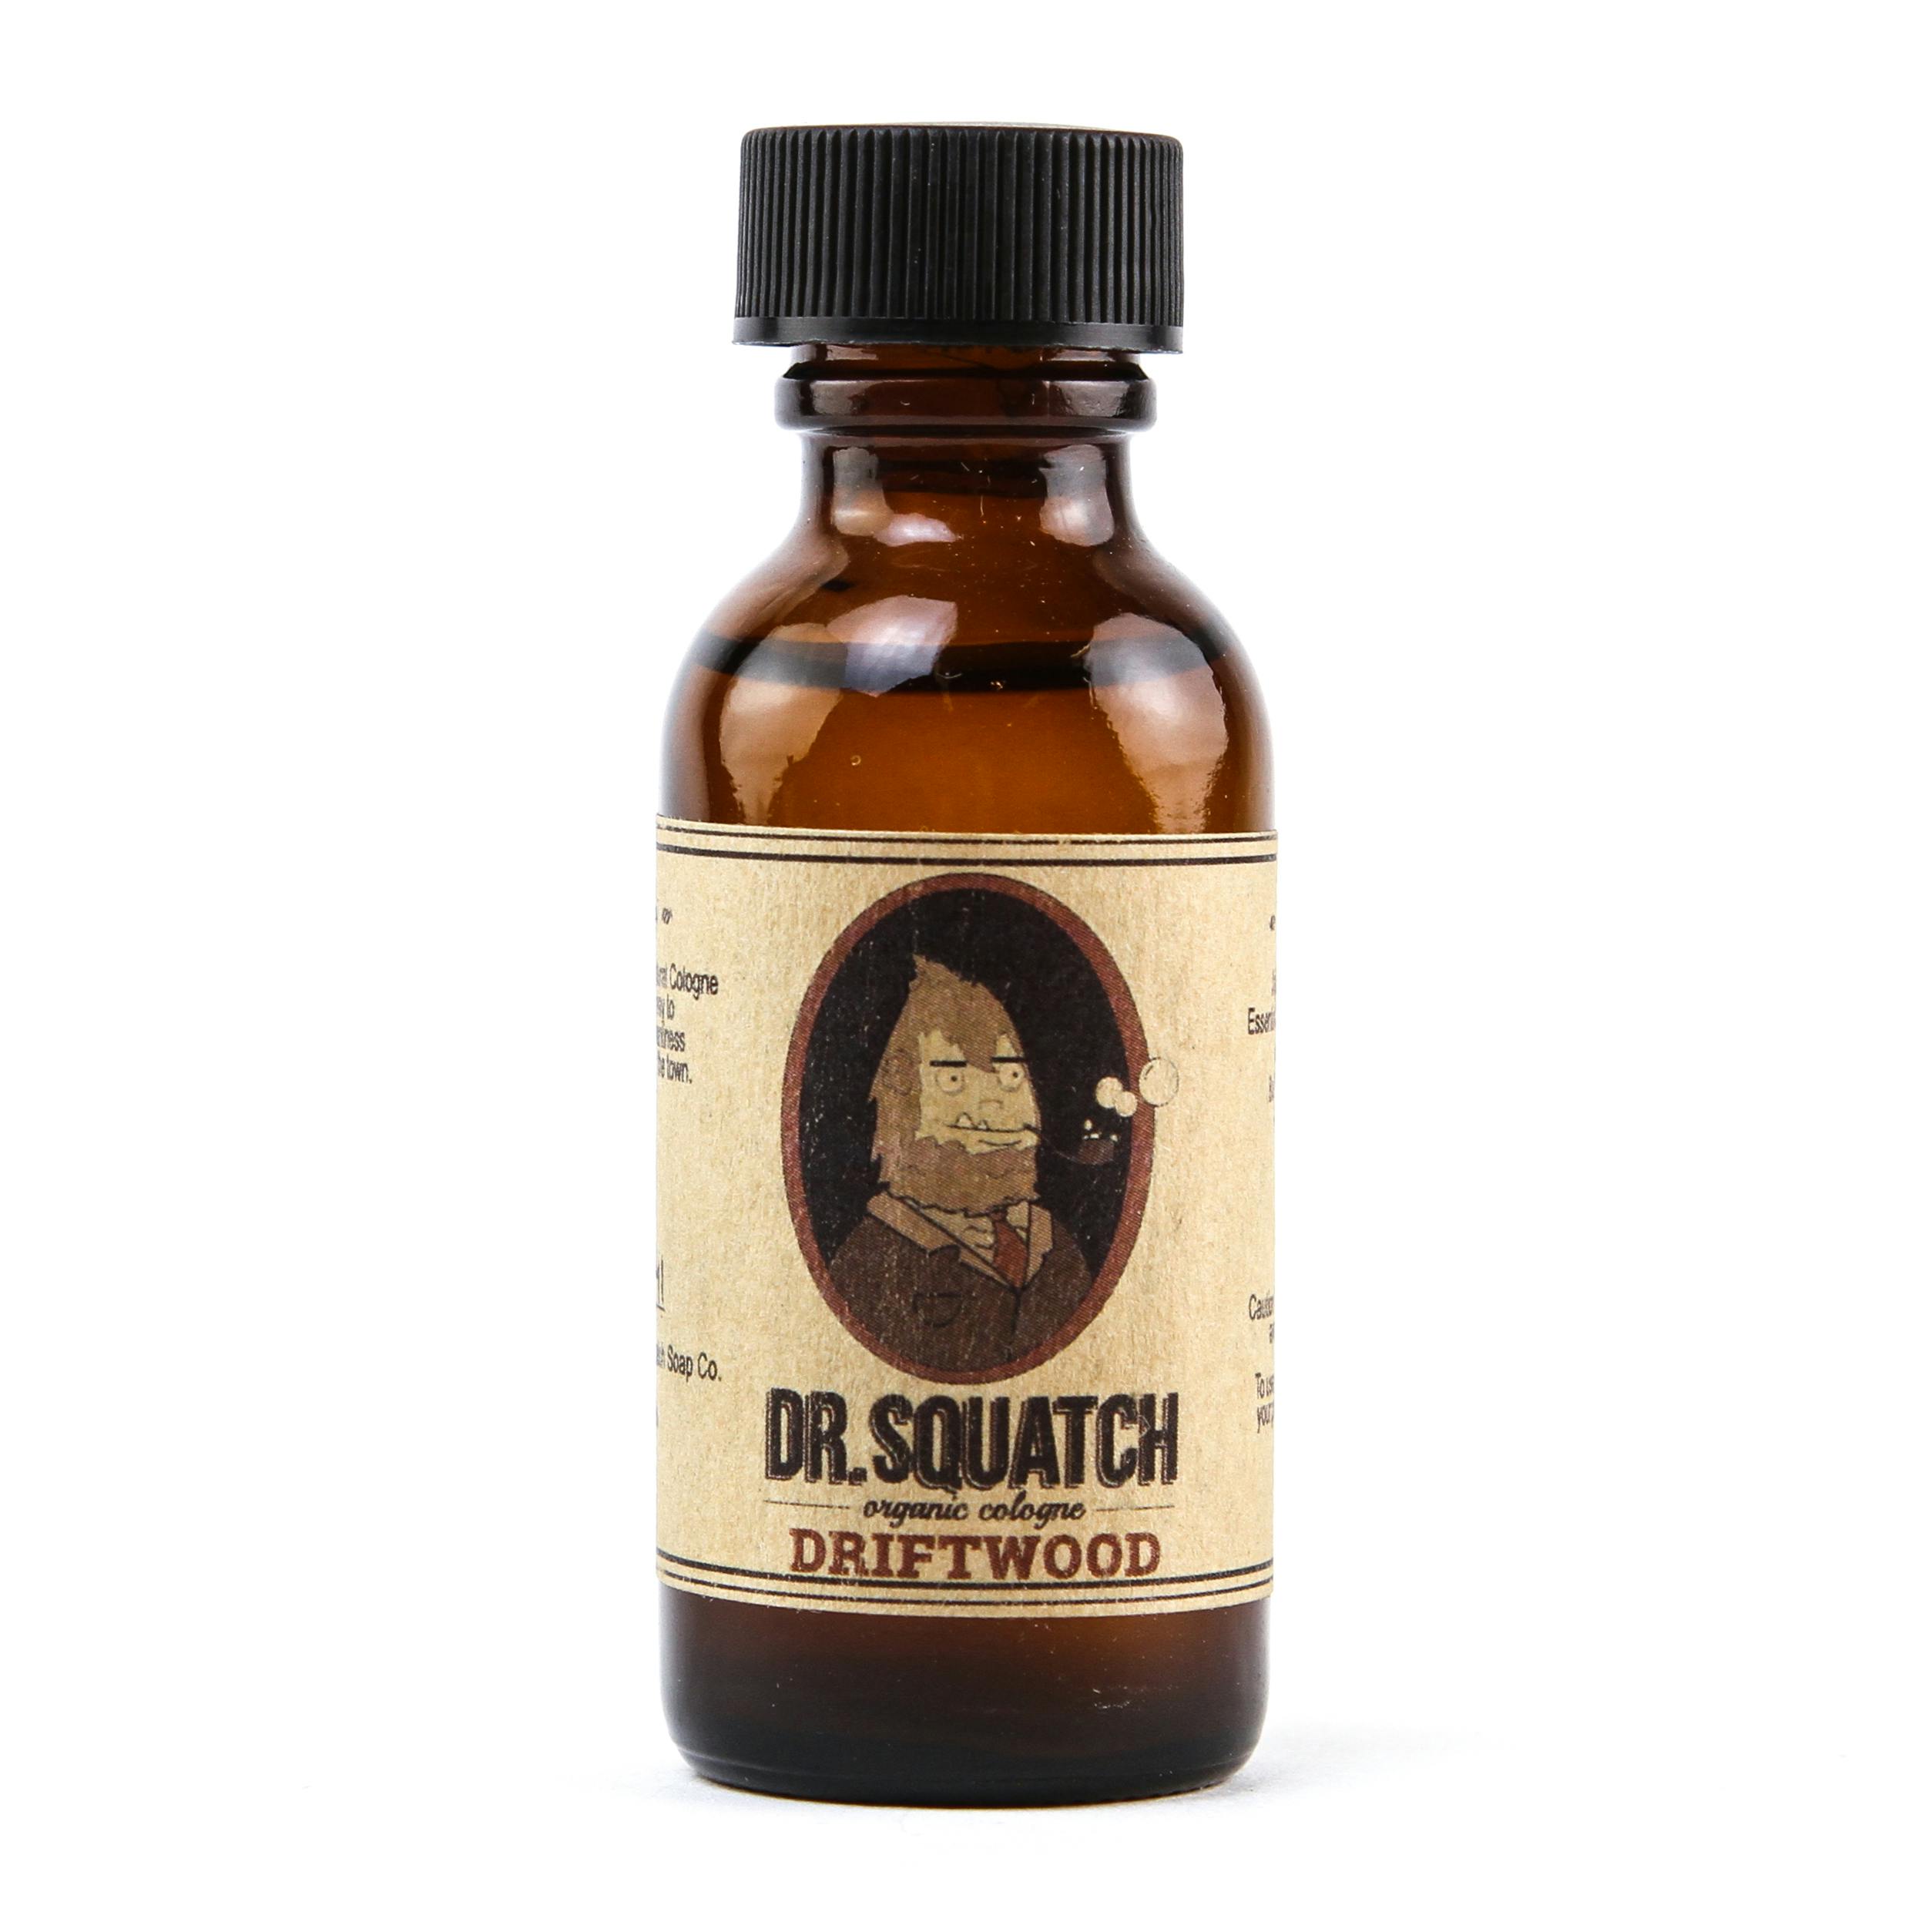 Dr squatch cologne review｜TikTok Search